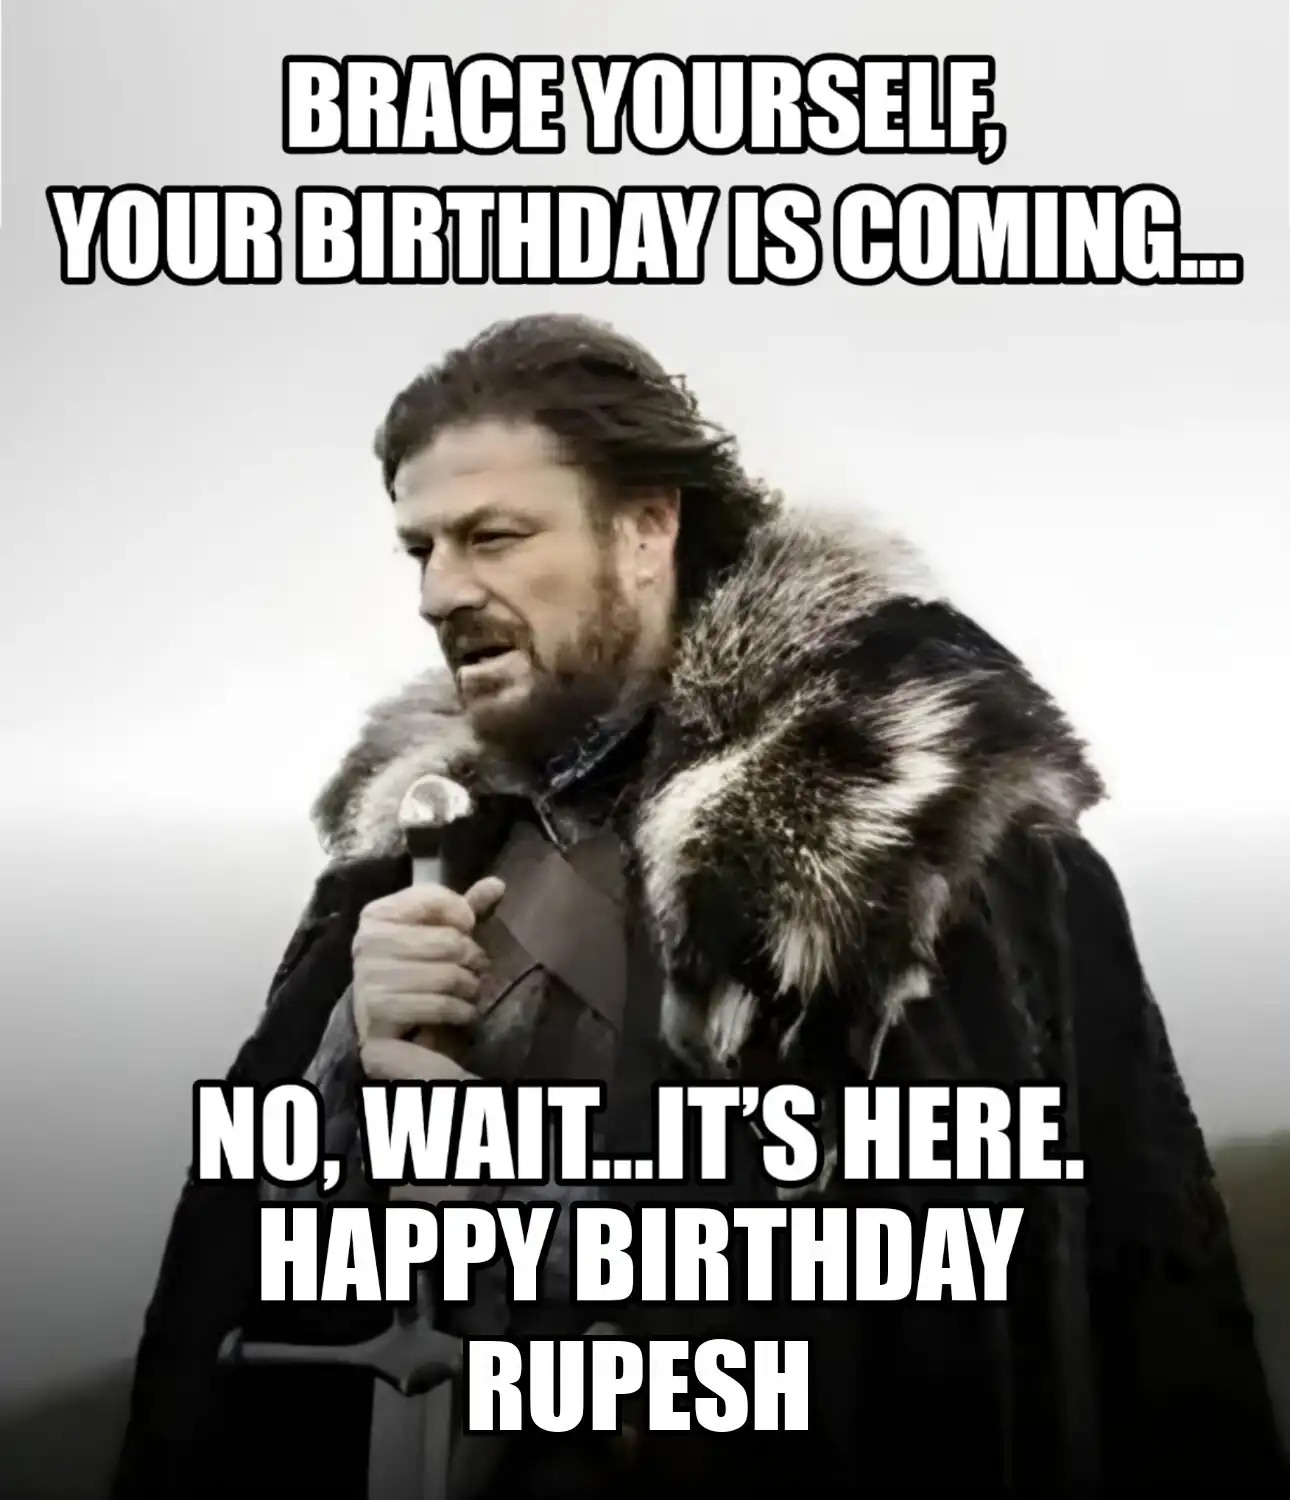 Happy Birthday Rupesh Brace Yourself Your Birthday Is Coming Meme